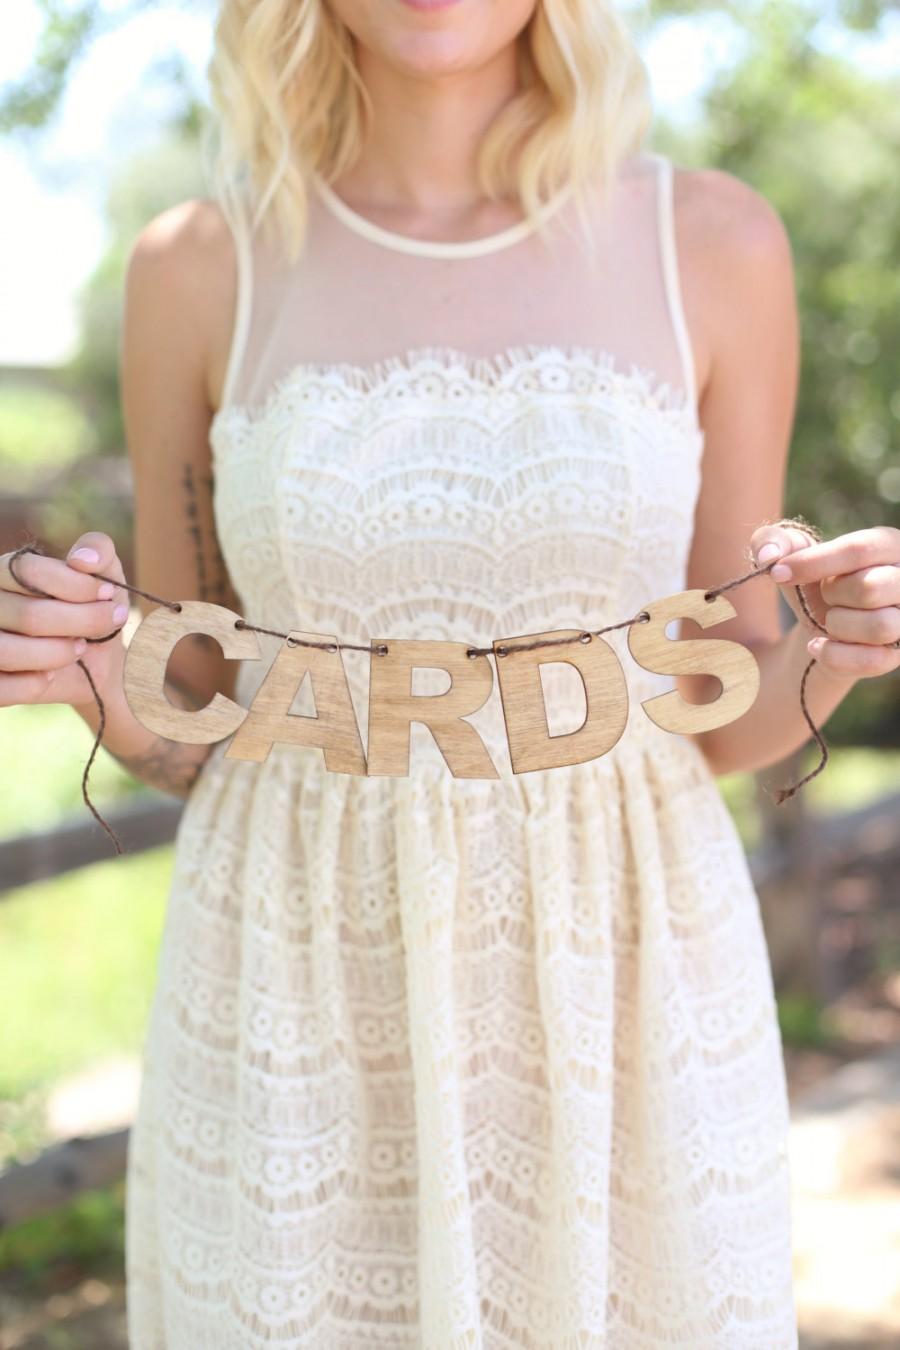 زفاف - Rustic Wood Wedding Sign Cards Wishes Gifts Drinks Advice QUICK shipping available 